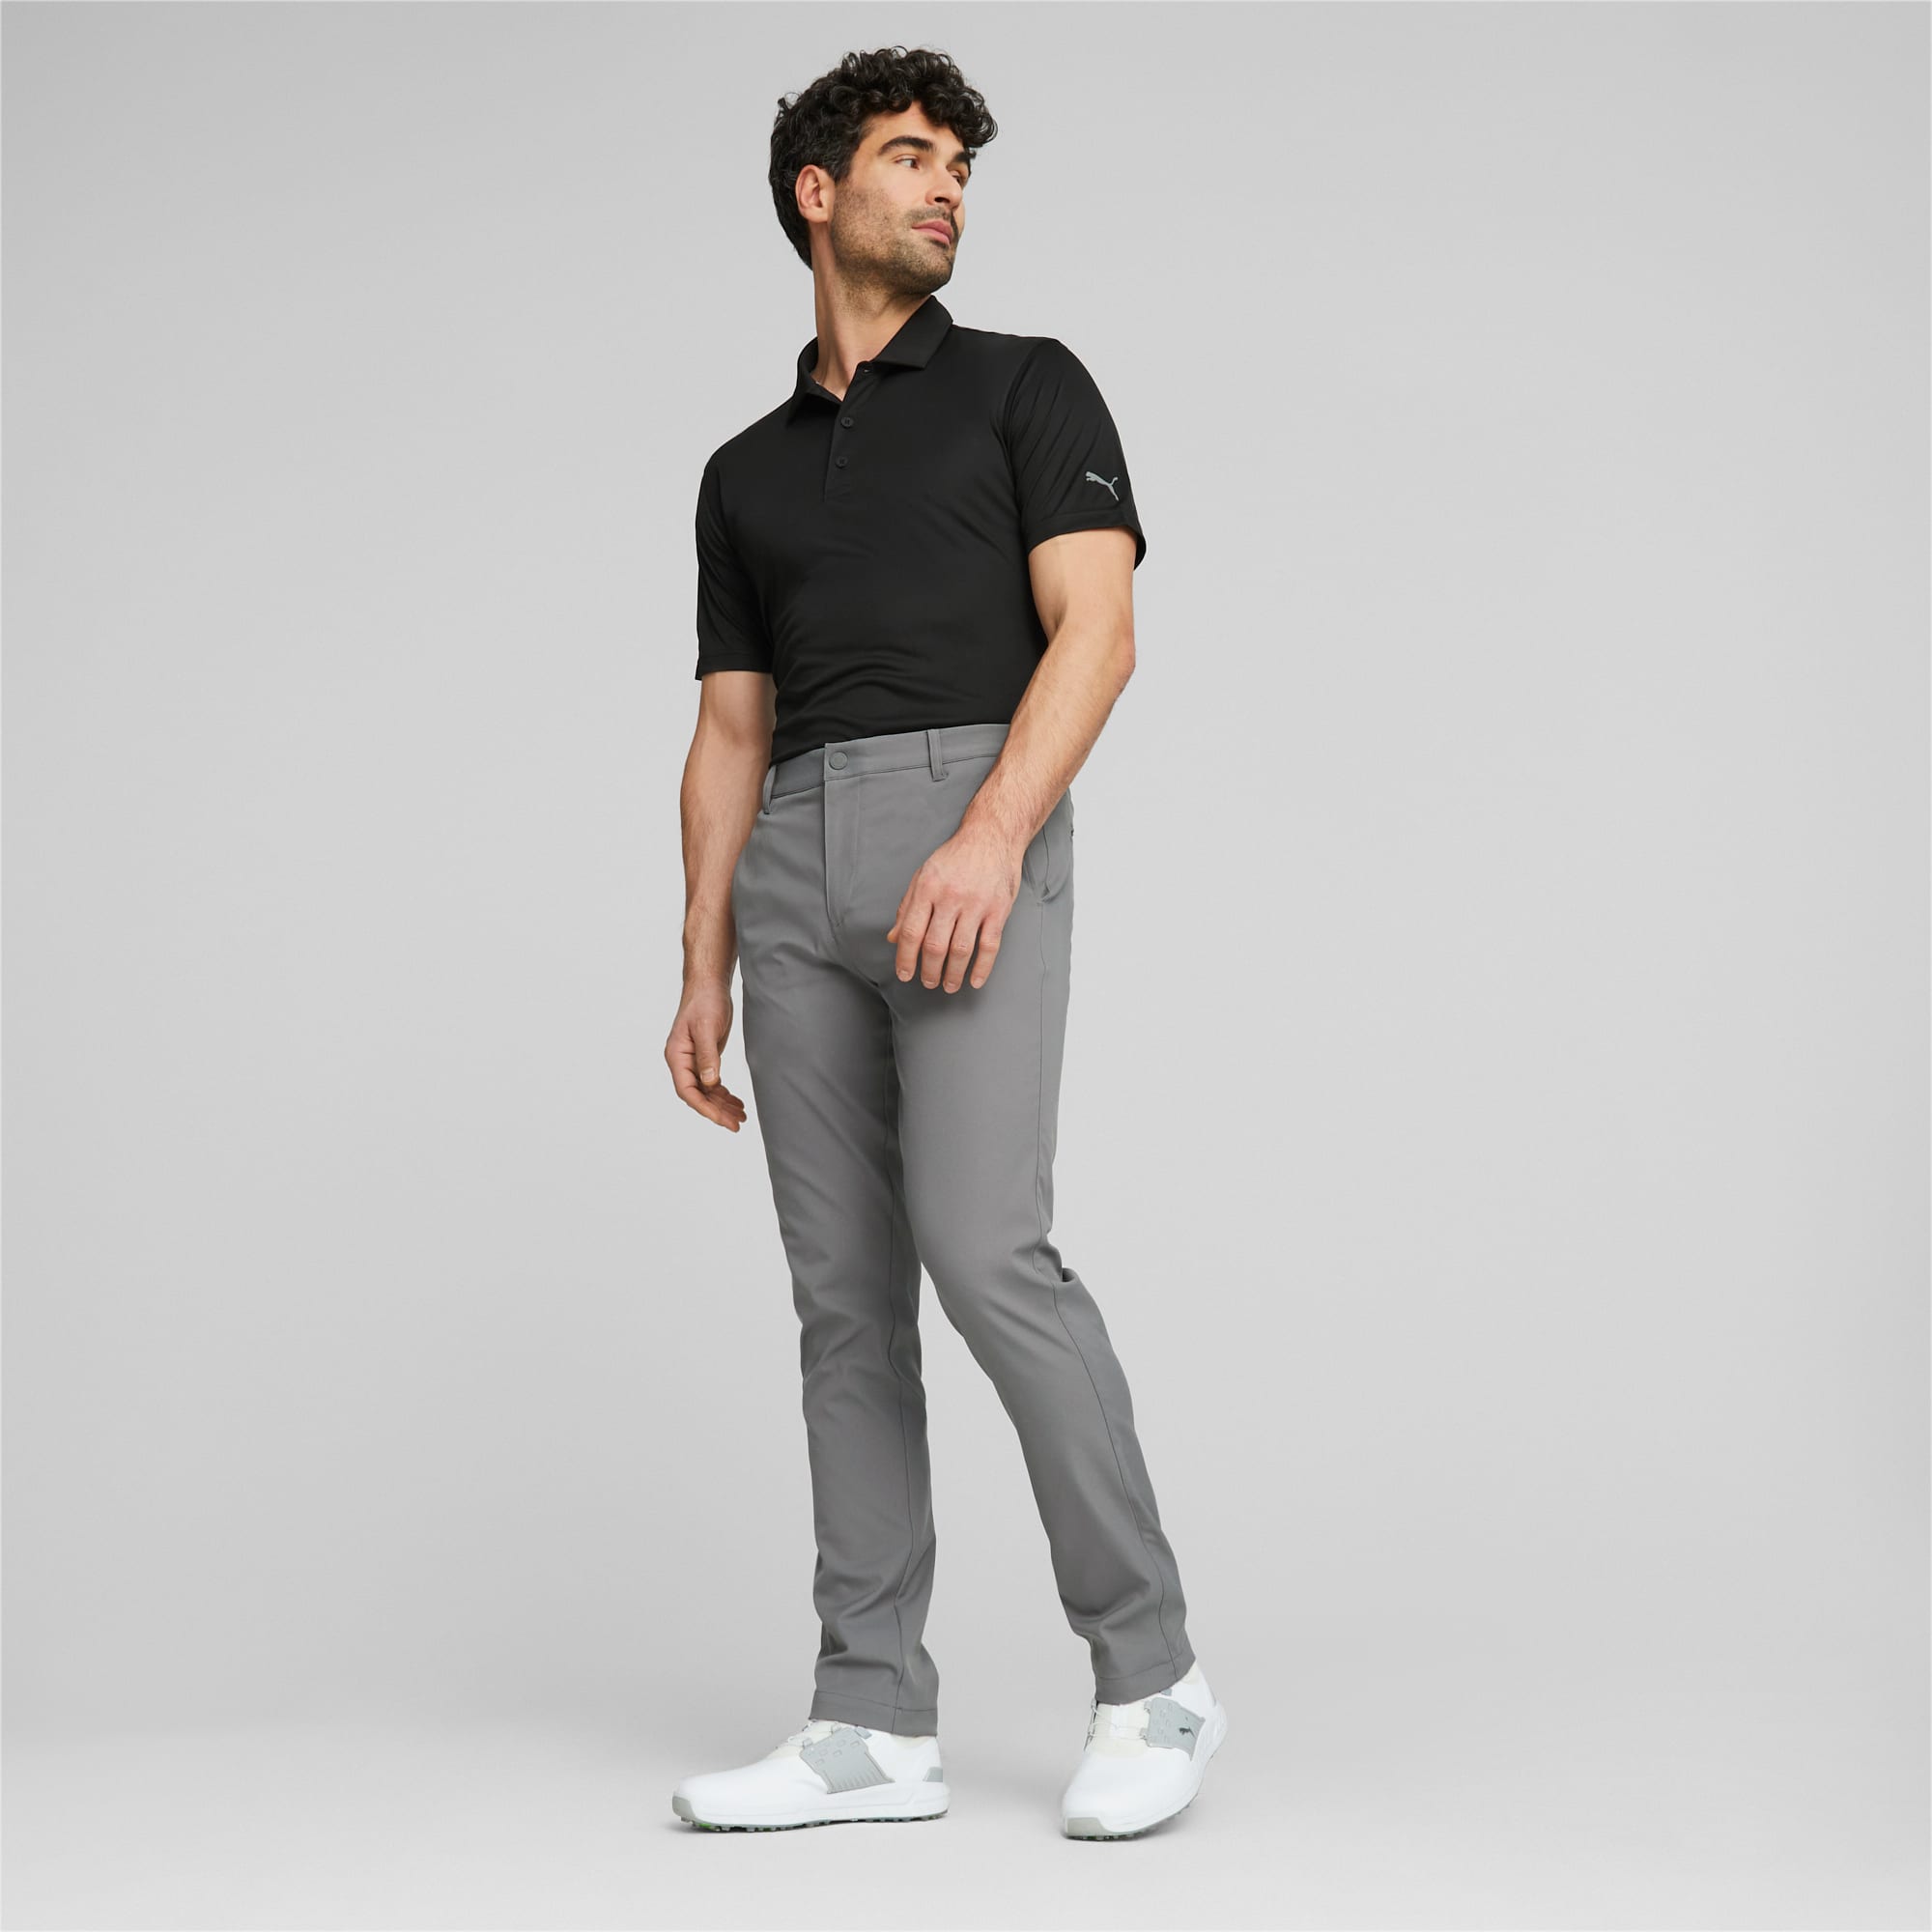 PUMA Dealer Tailored Golf Pants Men, Slate Sky, Size 34/32, Clothing